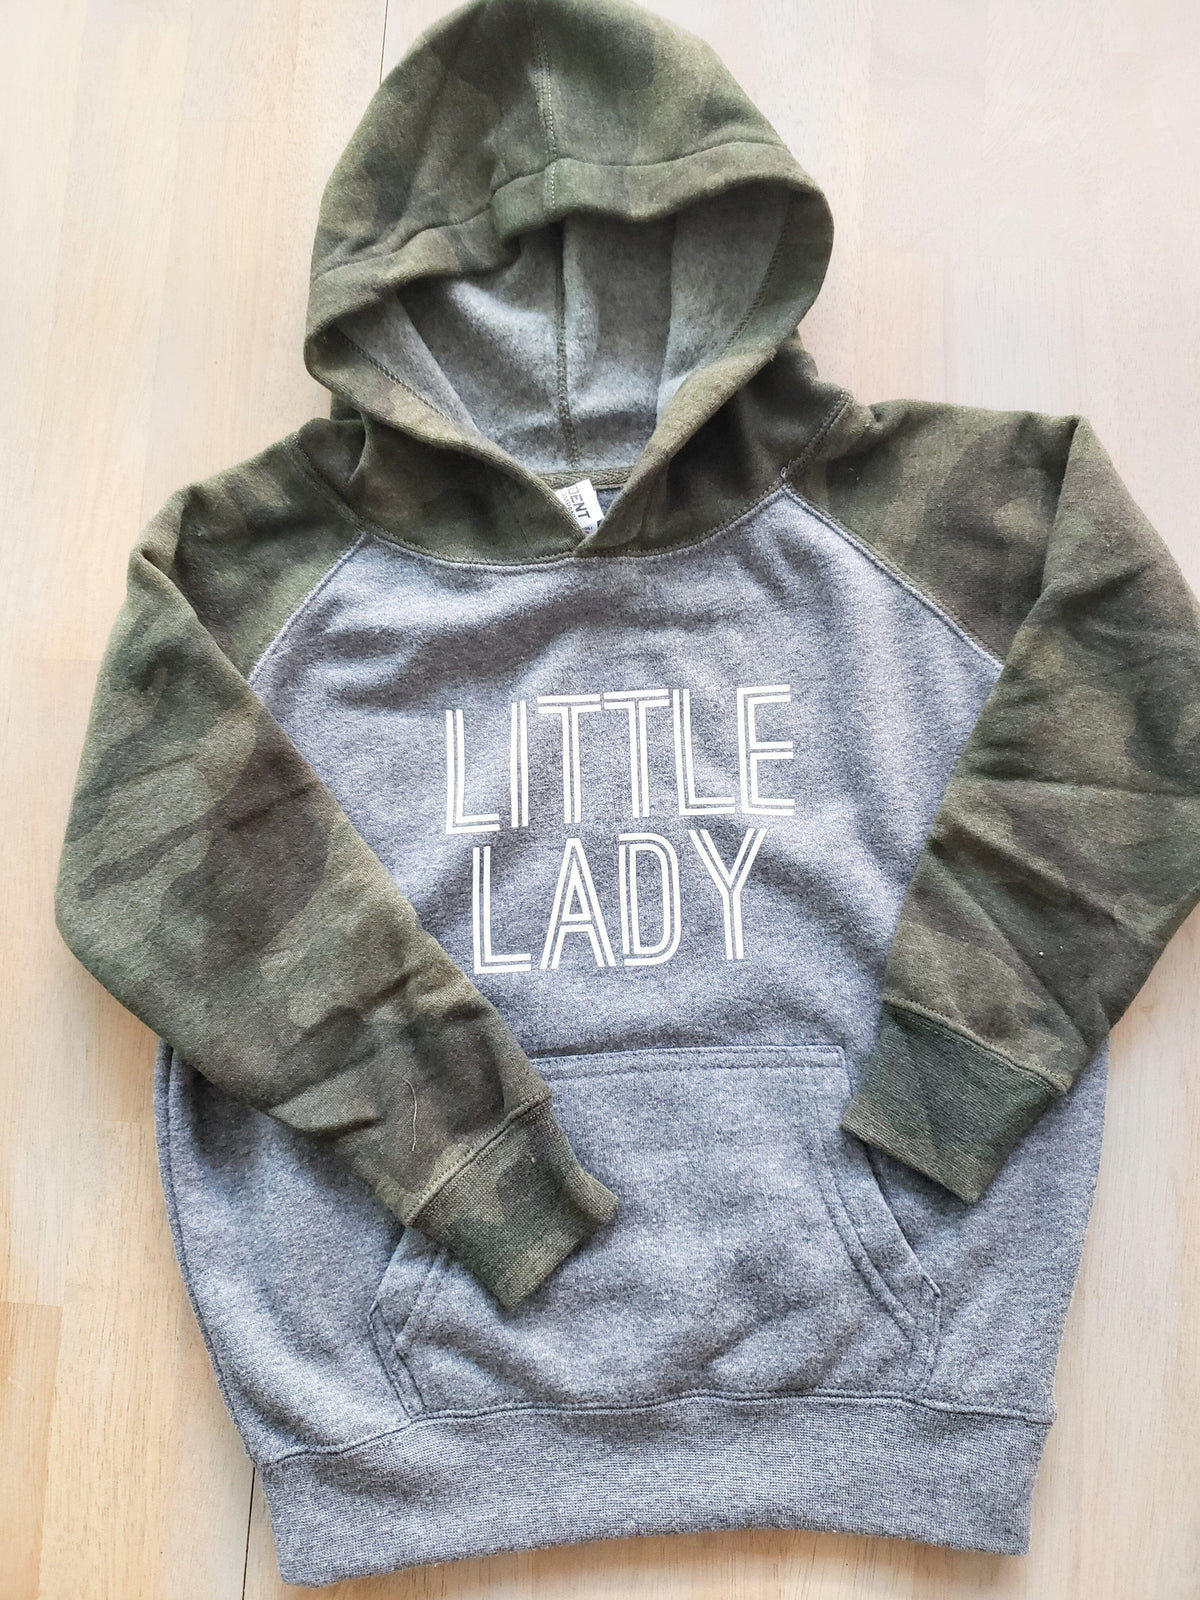 Little Man/ Lady Hoodie - 